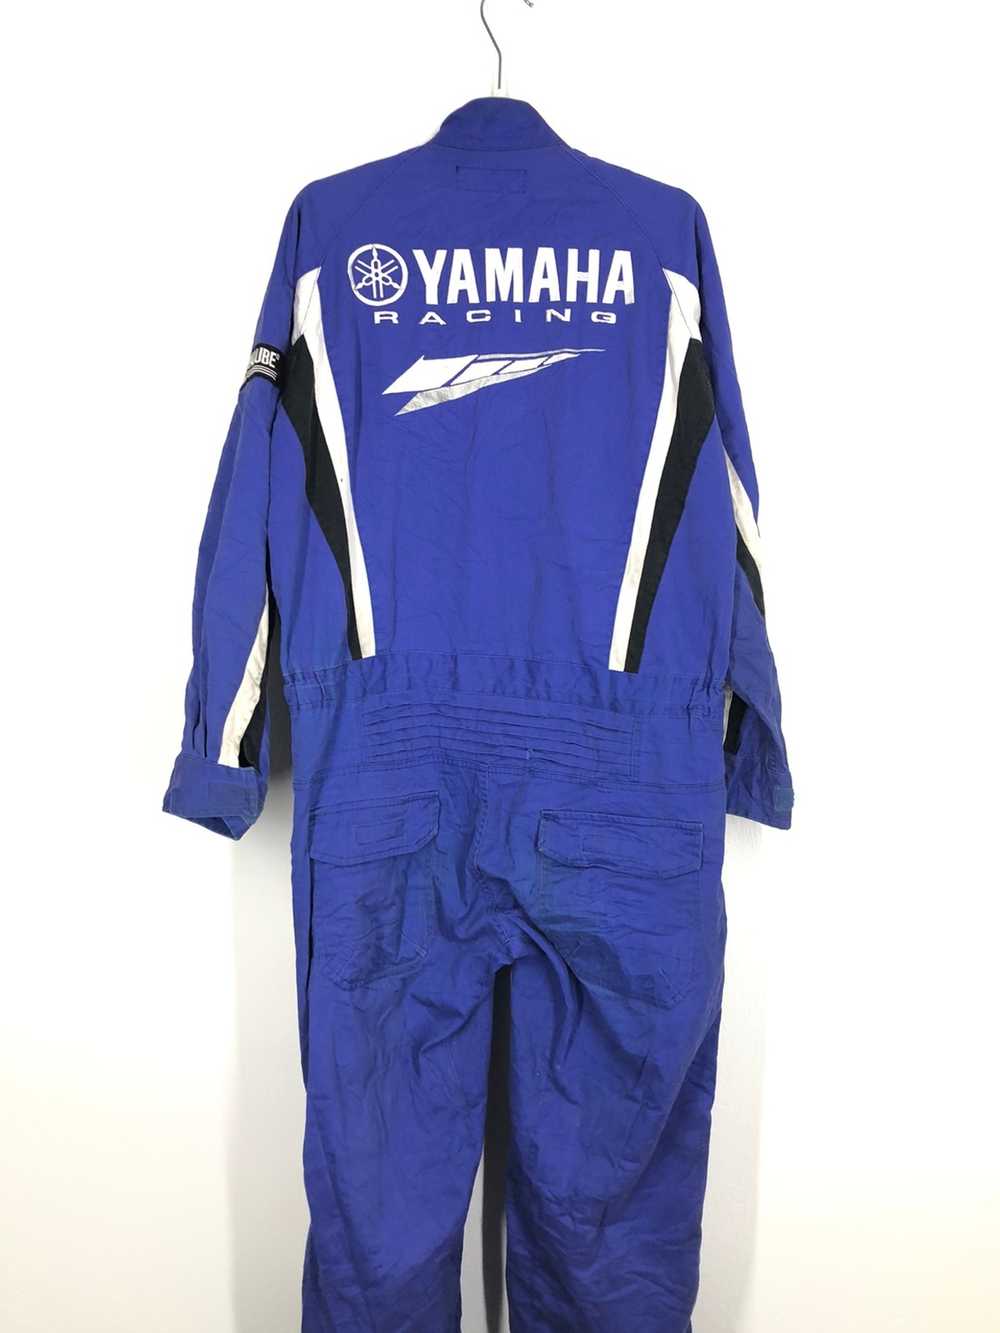 Vintage × Yamaha YAMAHA Team Racing Overall Suit - Gem